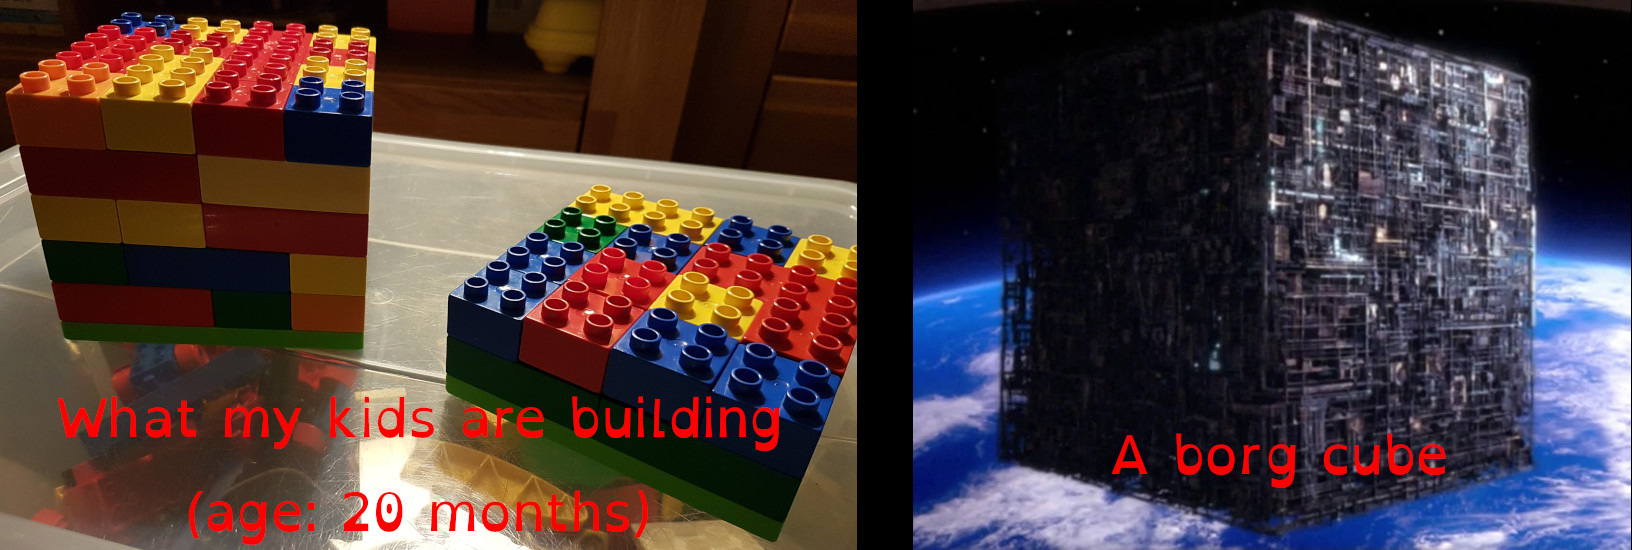 Lego vs Borg cube